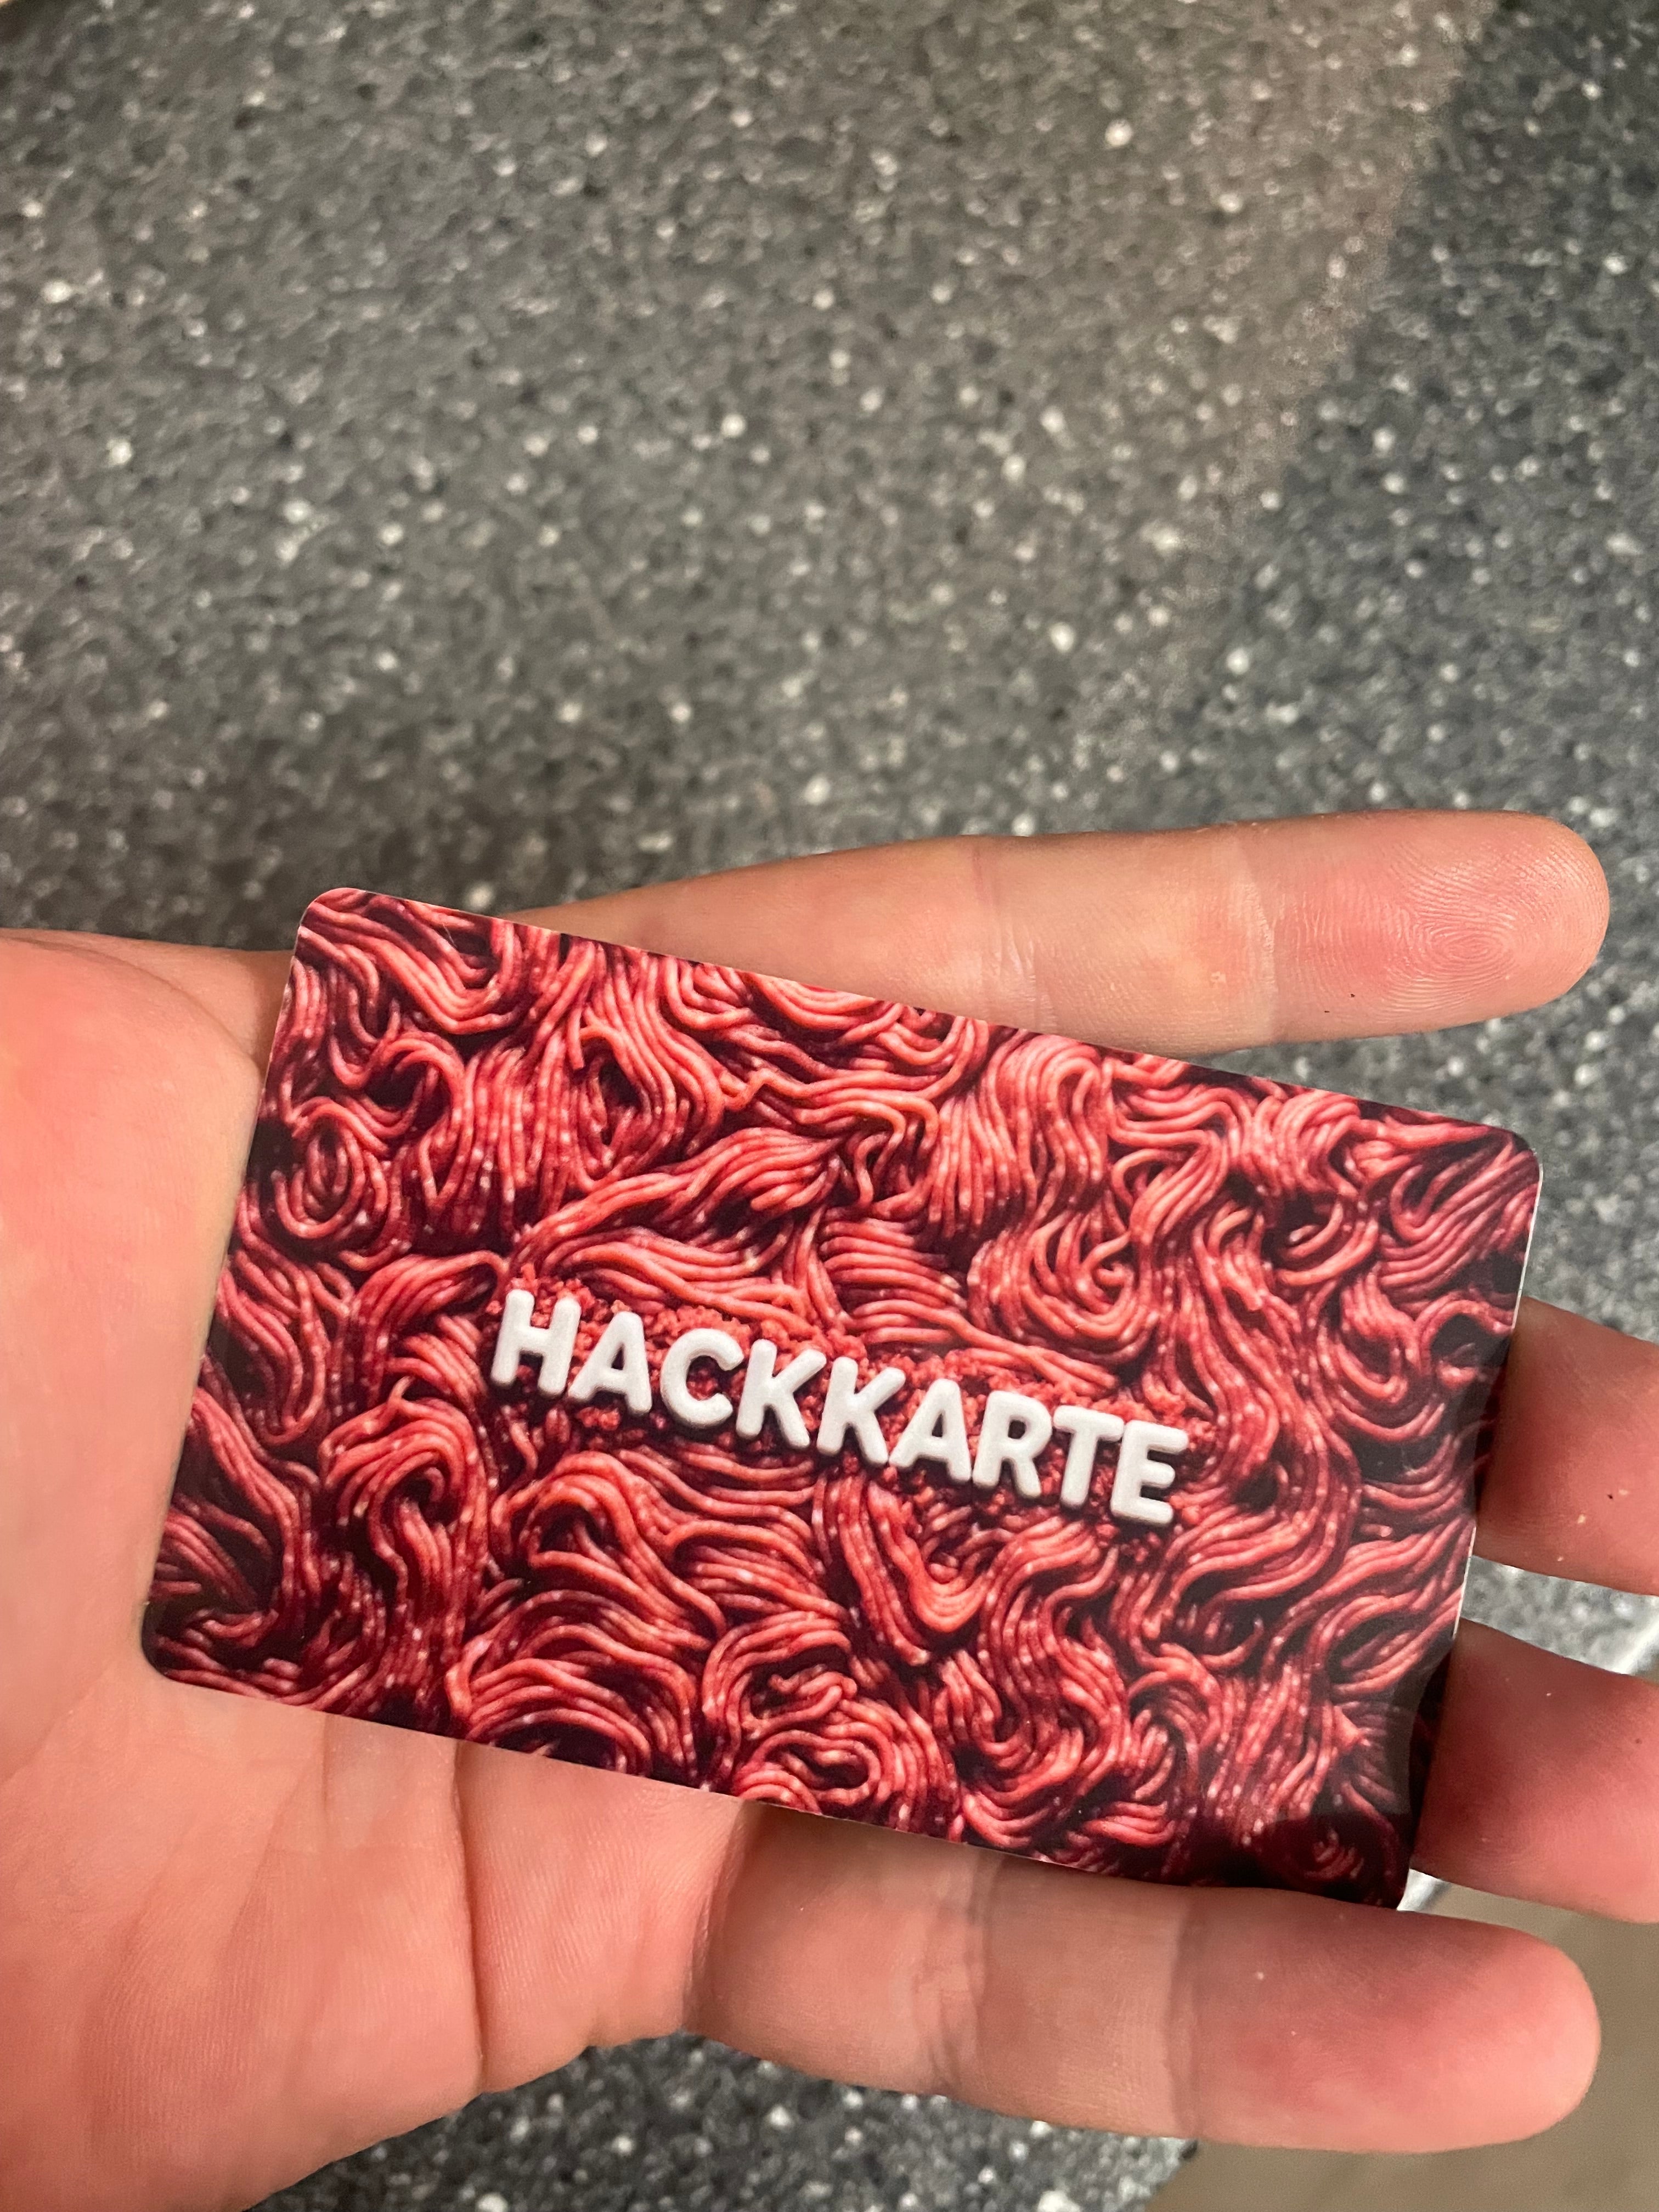 plastik karte hack edition